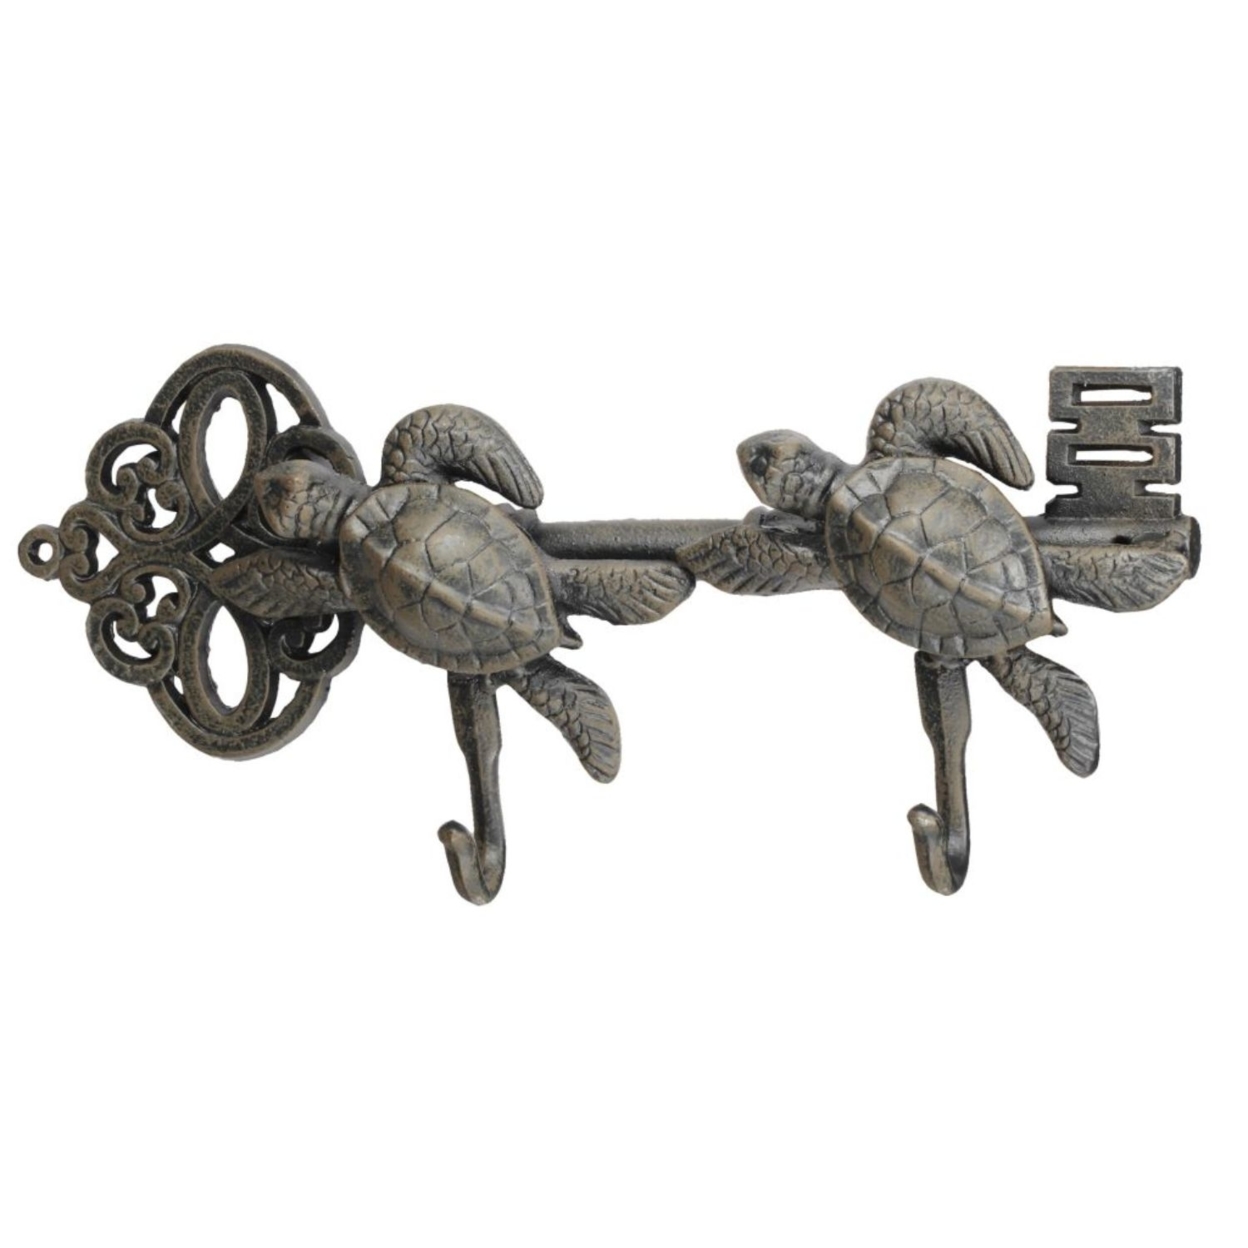 Decorative Sea Turtles Iron Wall Hook On Antique Key, Gray- Saltoro Sherpi